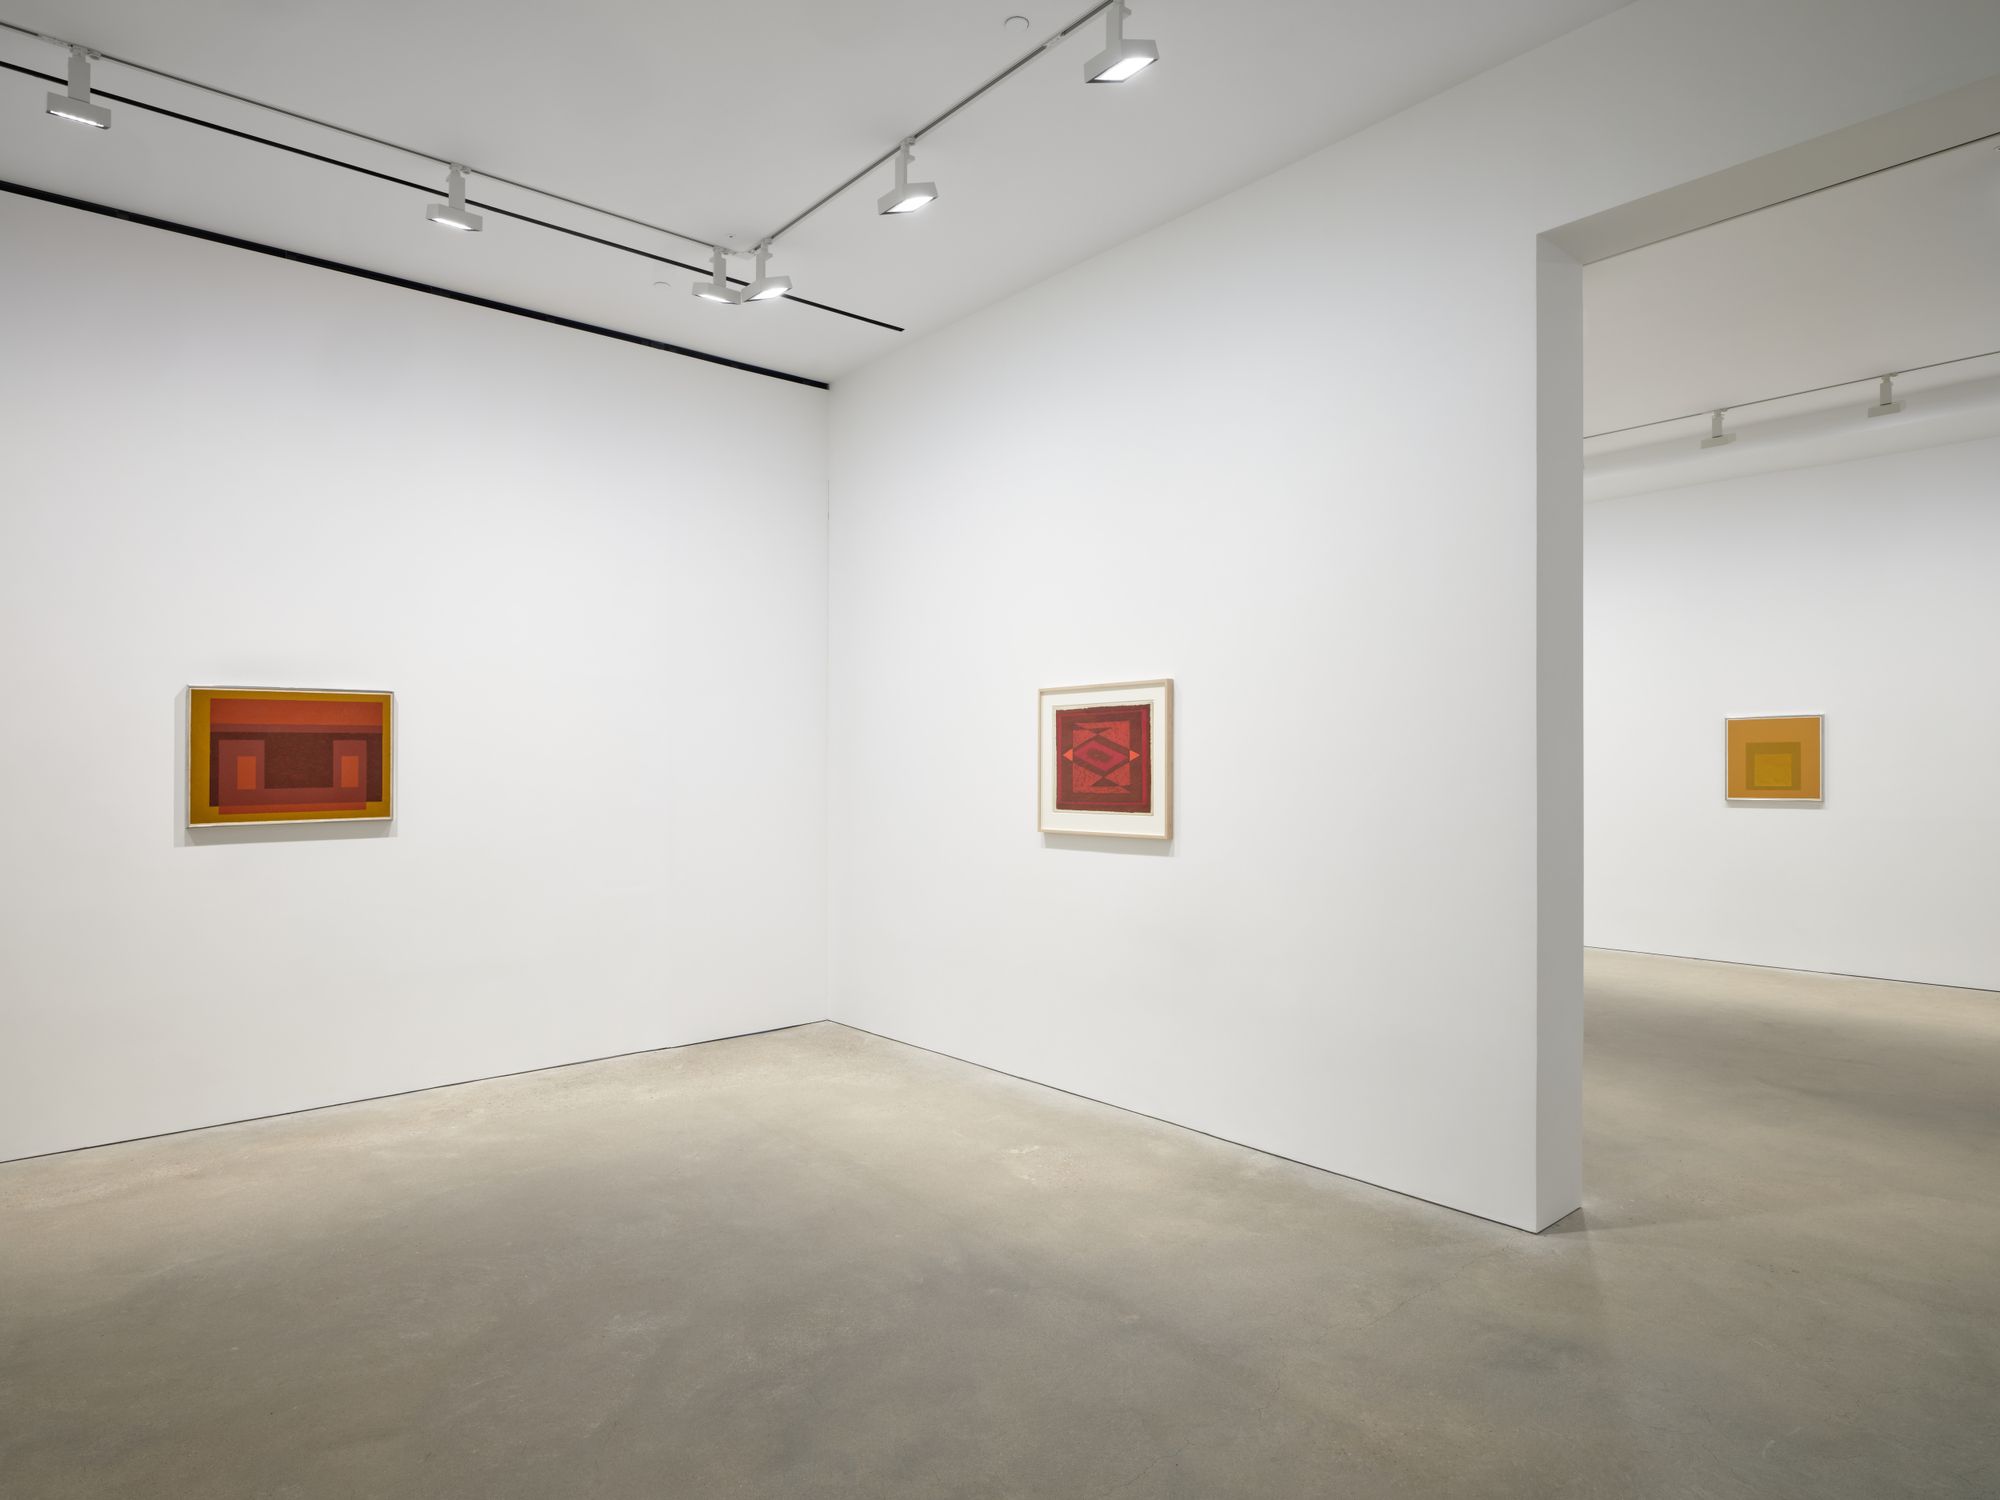 Josef Albers, 'Primary Colors' at David Zwirner, Hong Kong on 18 